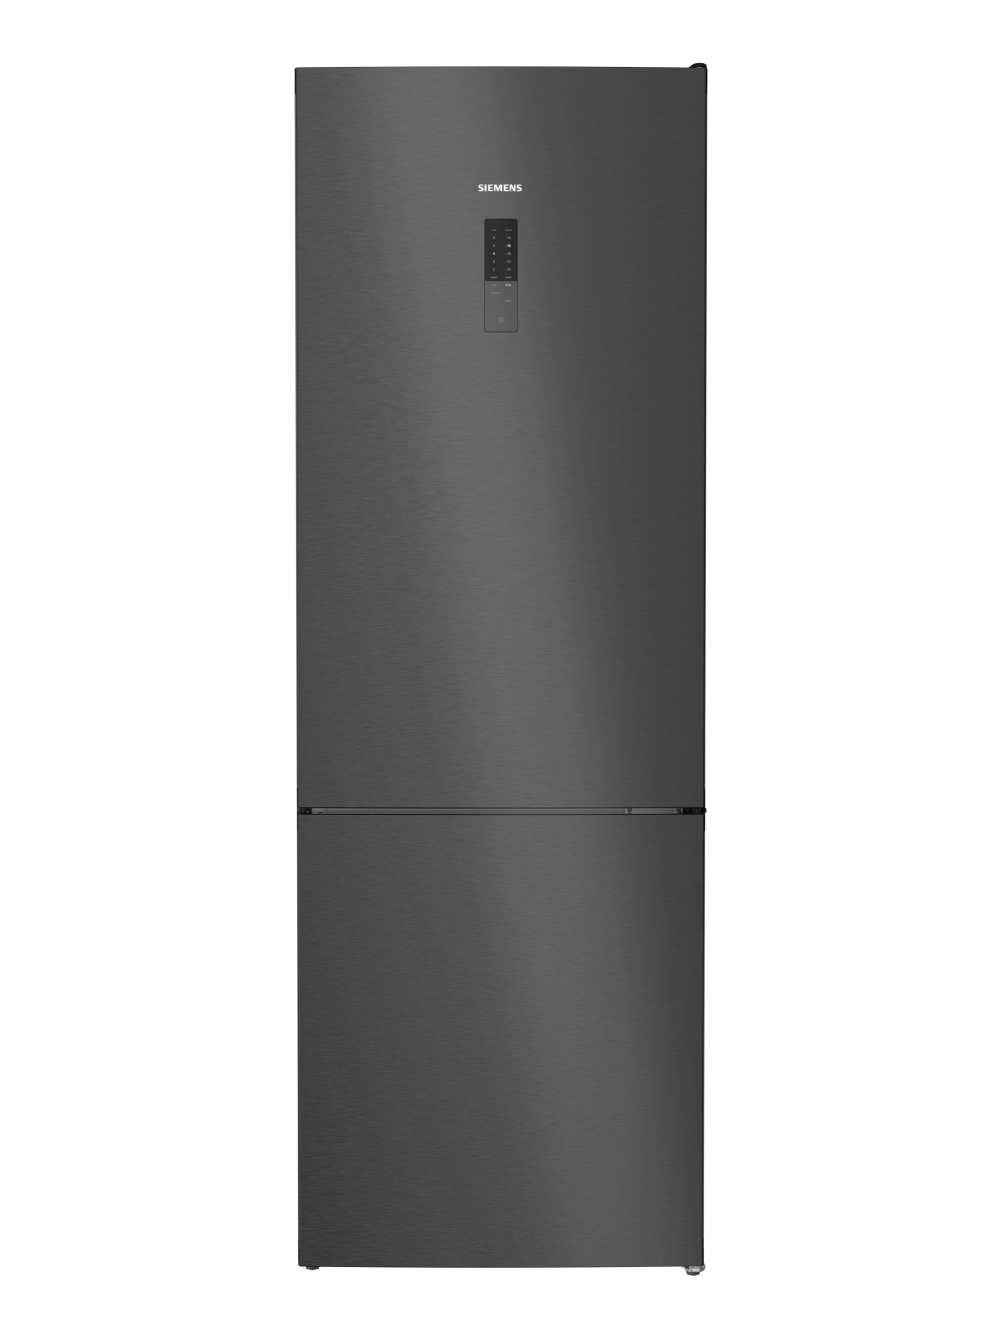 Siemens KG49NXXDF iQ300 Freestanding Fridge-Freezer featured image